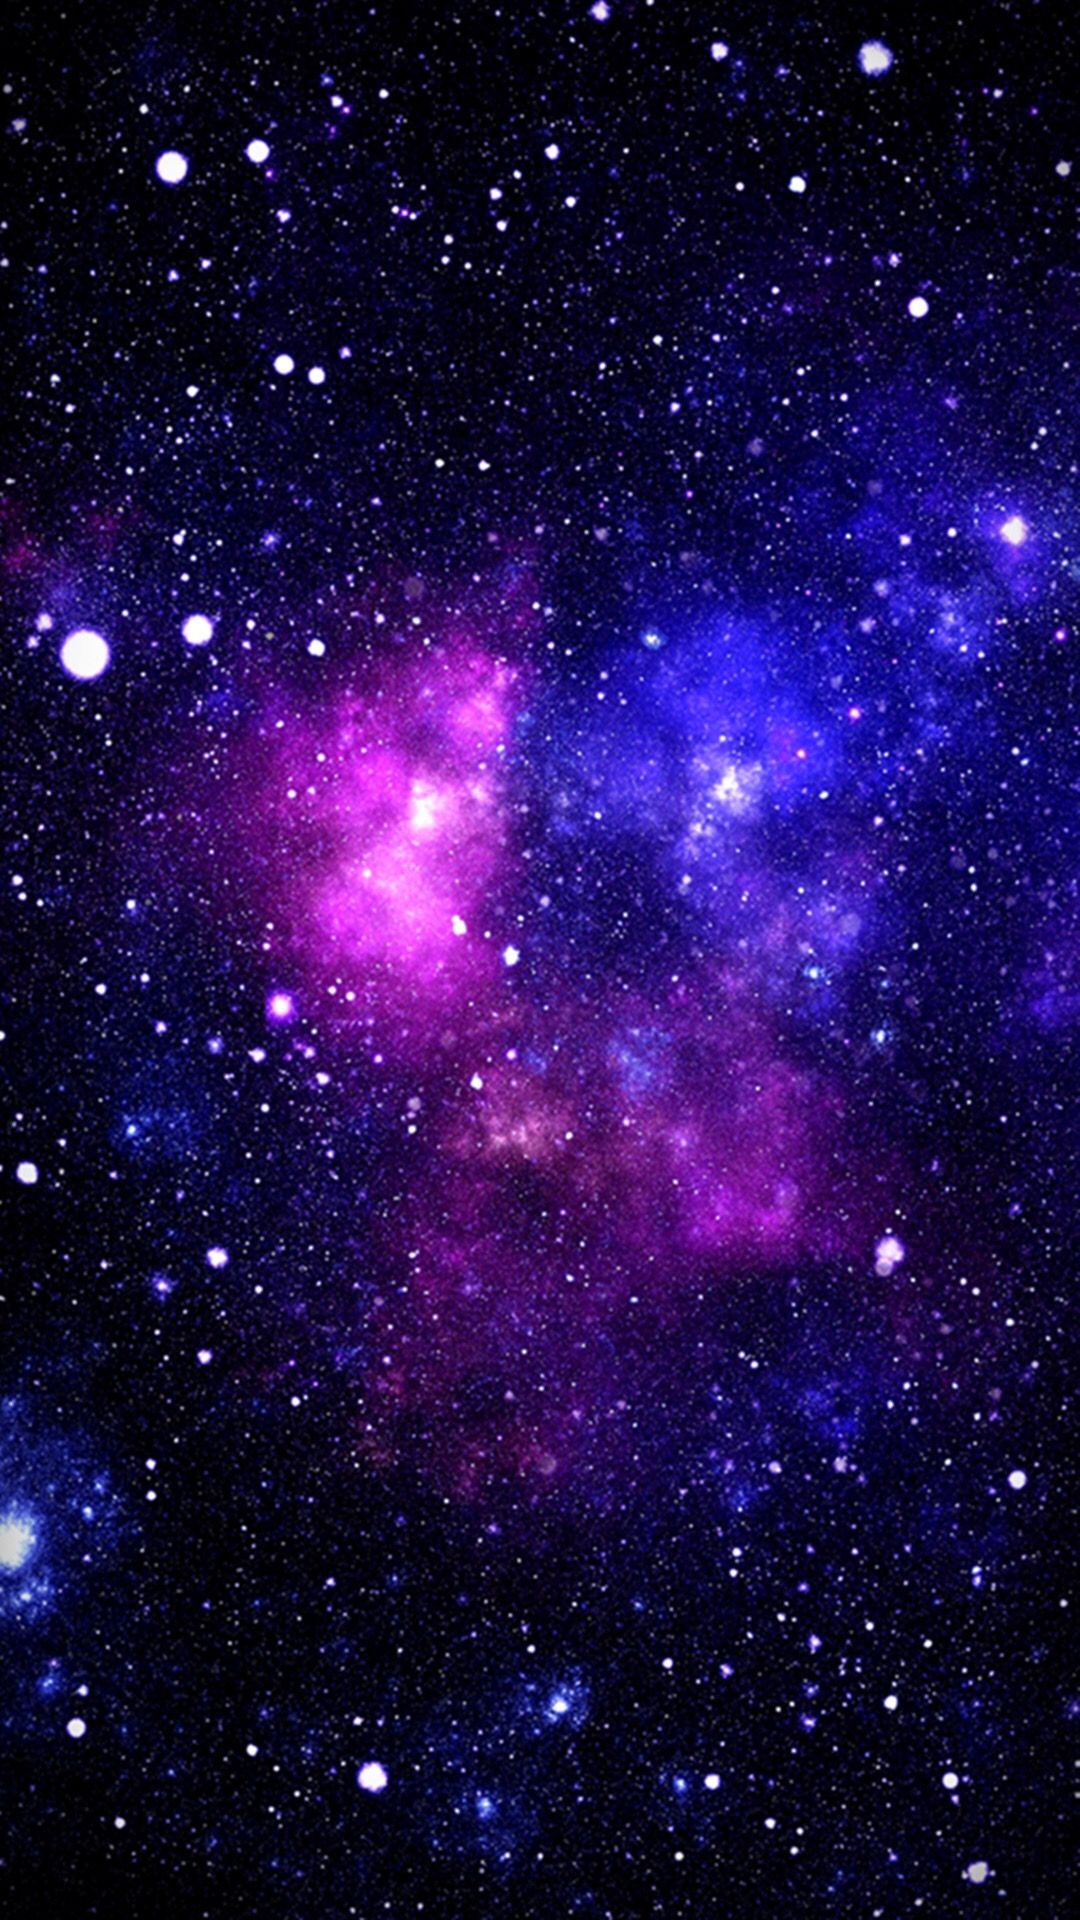 27 Purple And Blue Galaxy Wallpapers On Wallpapersafari